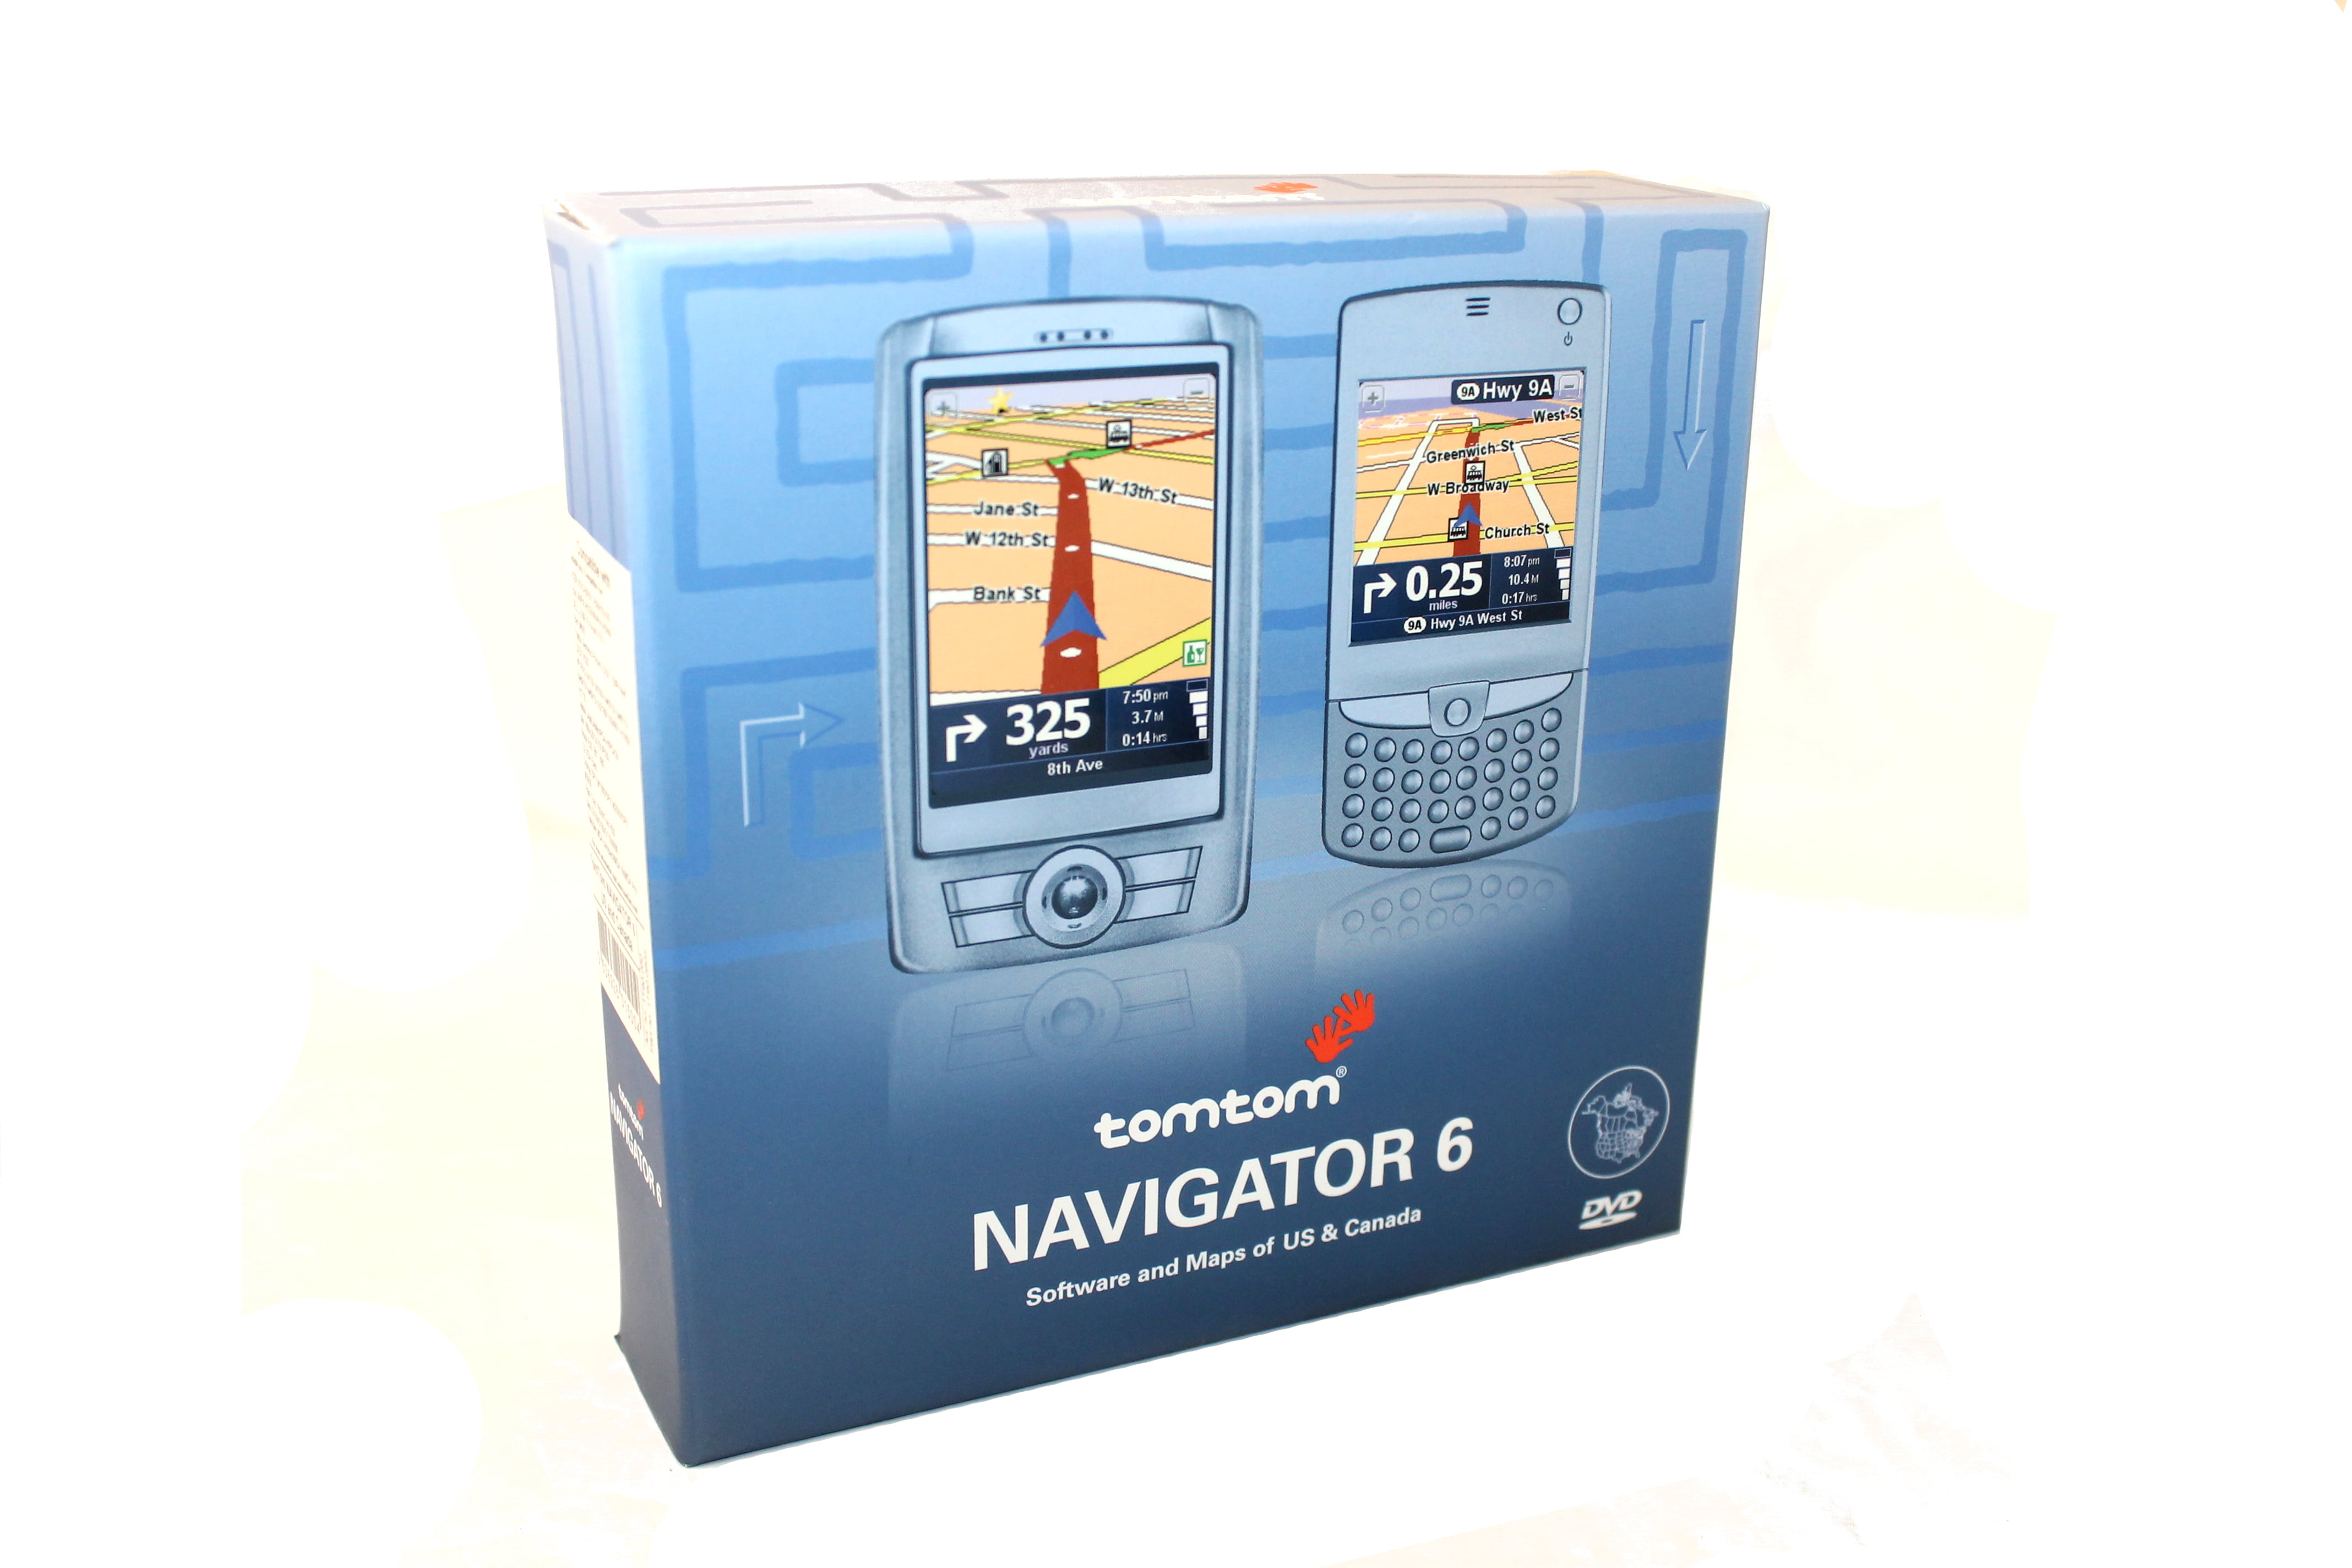 TomTom Navigator 6 PDA GPS Navigation Software DVD (U.S./Canada Map)